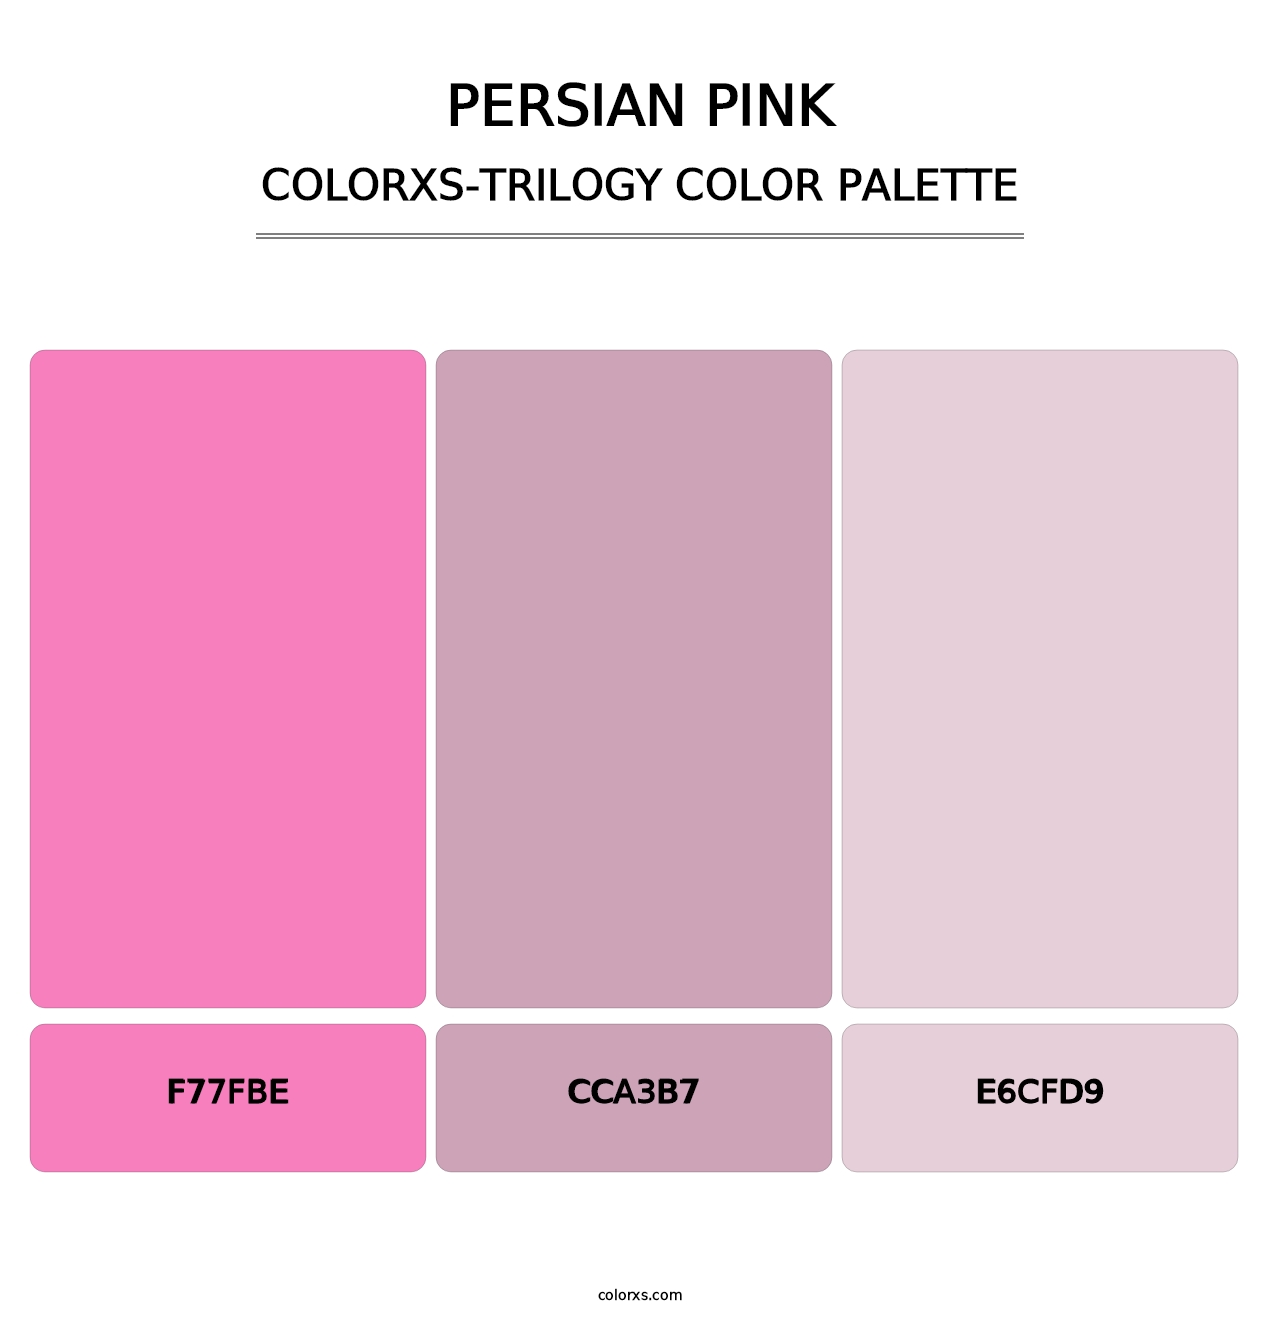 Persian Pink - Colorxs Trilogy Palette